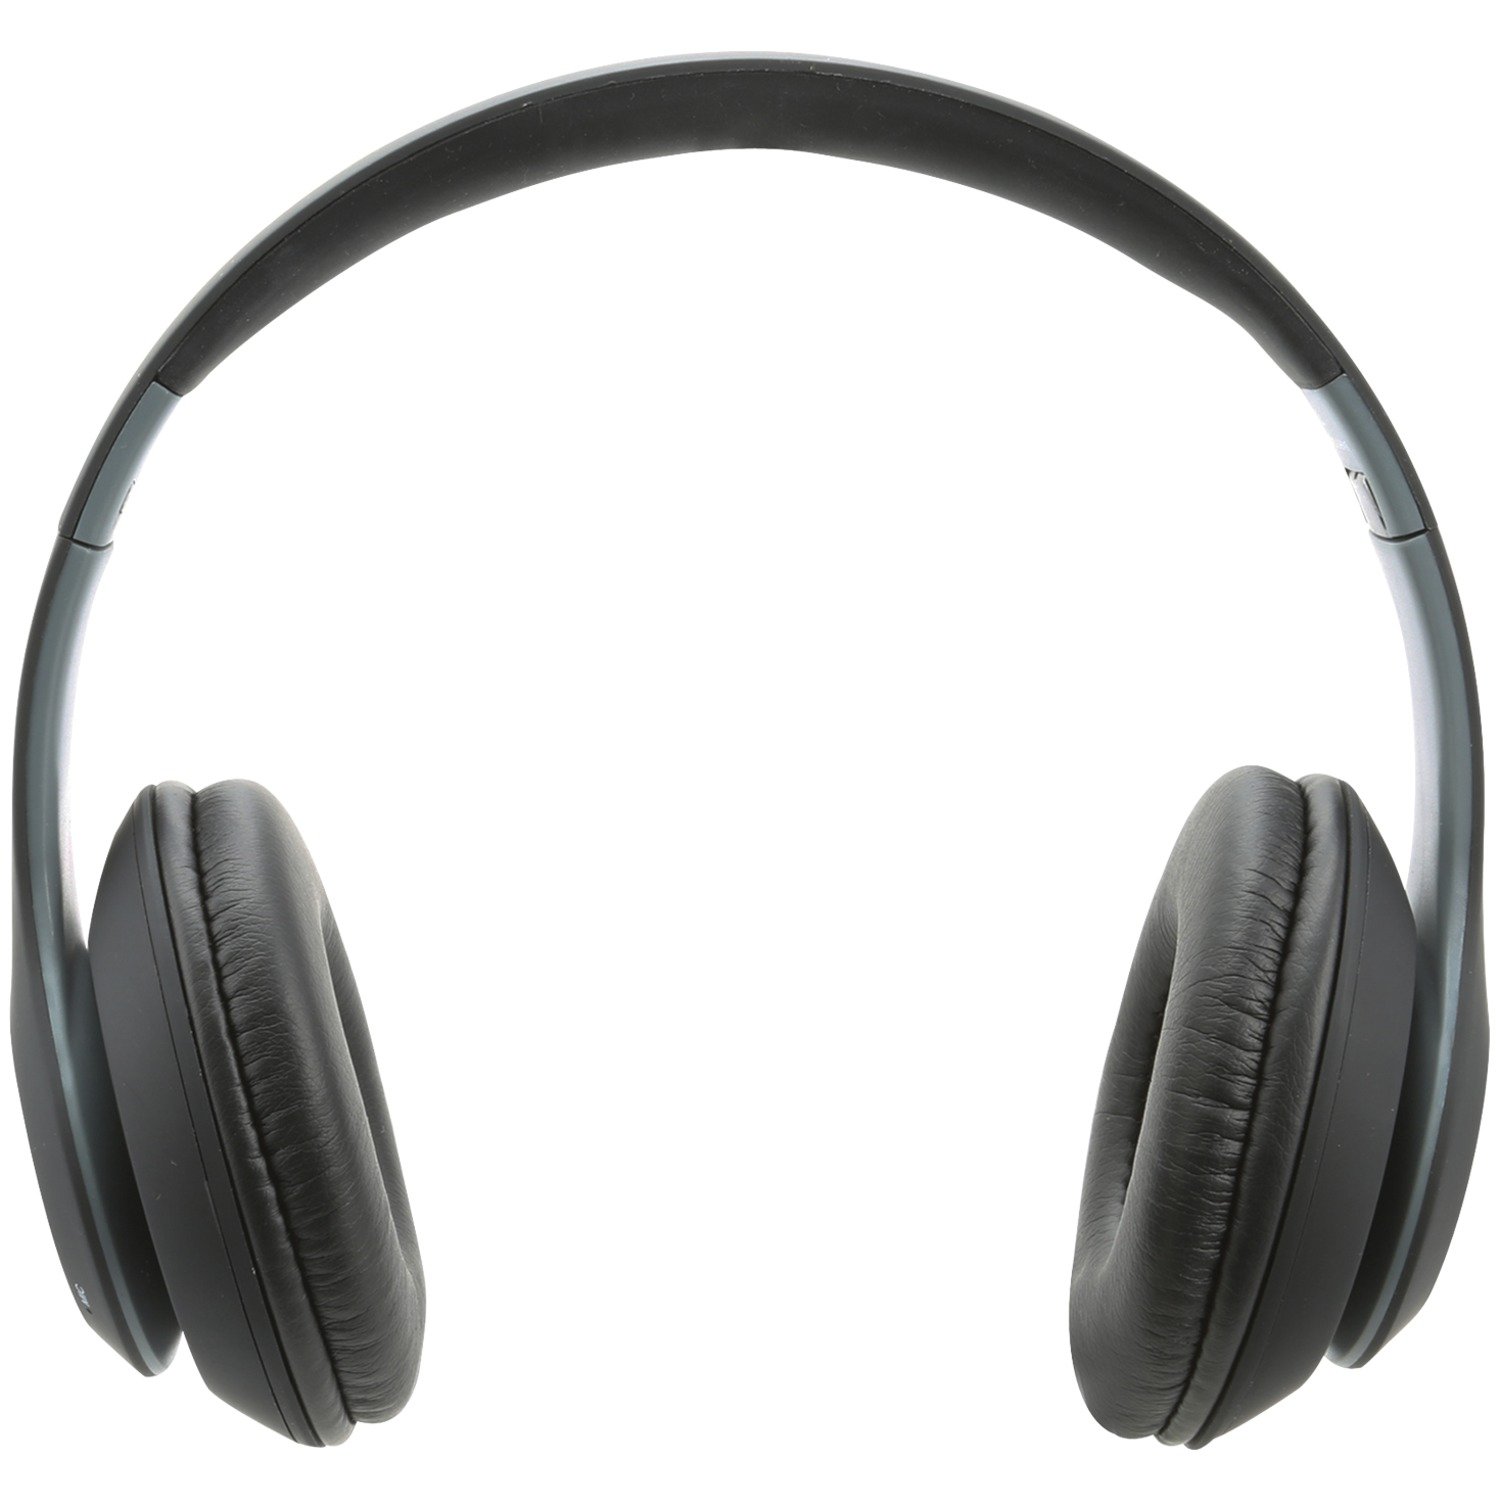 Ilive Iahb48mb Bluetooth Over-The-Ear Headphones